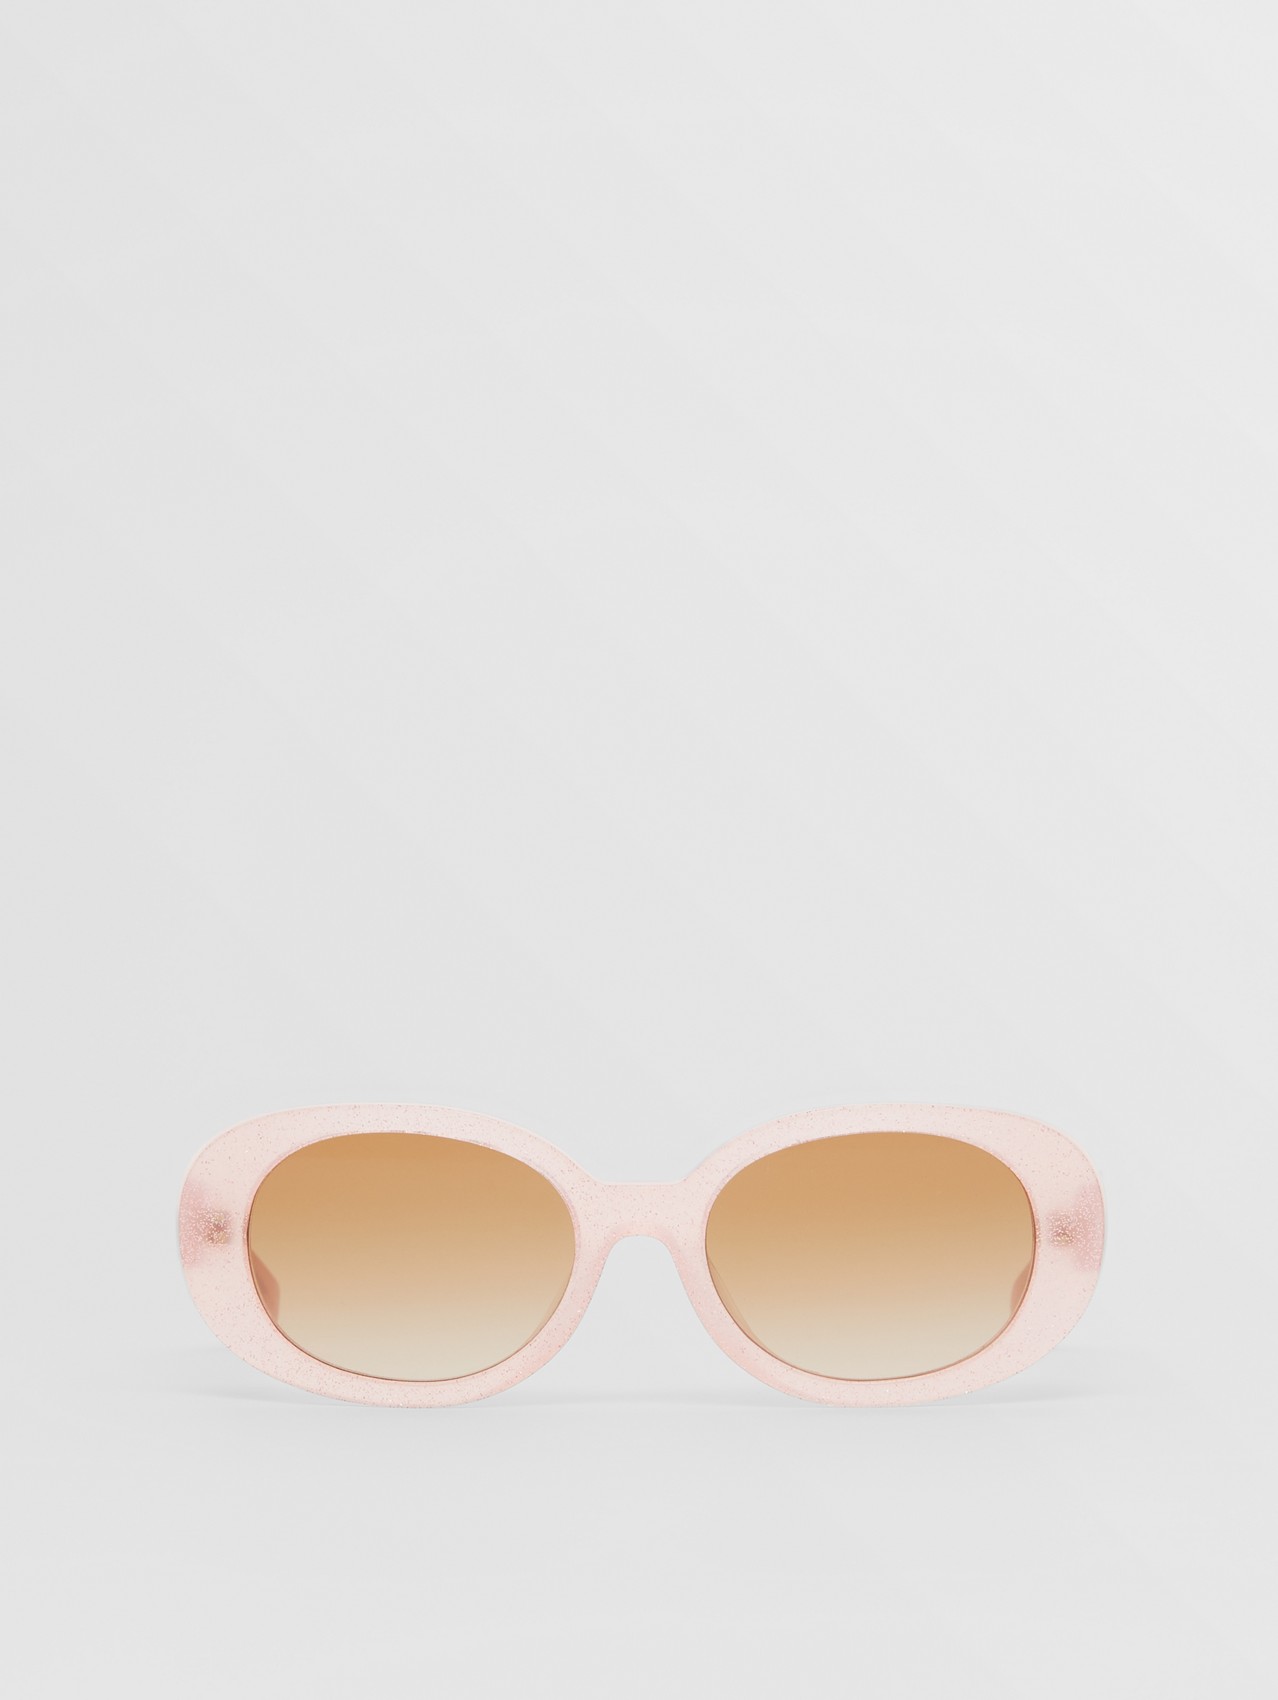 Sonnenbrille mit ovalem Gestell (Rosa)